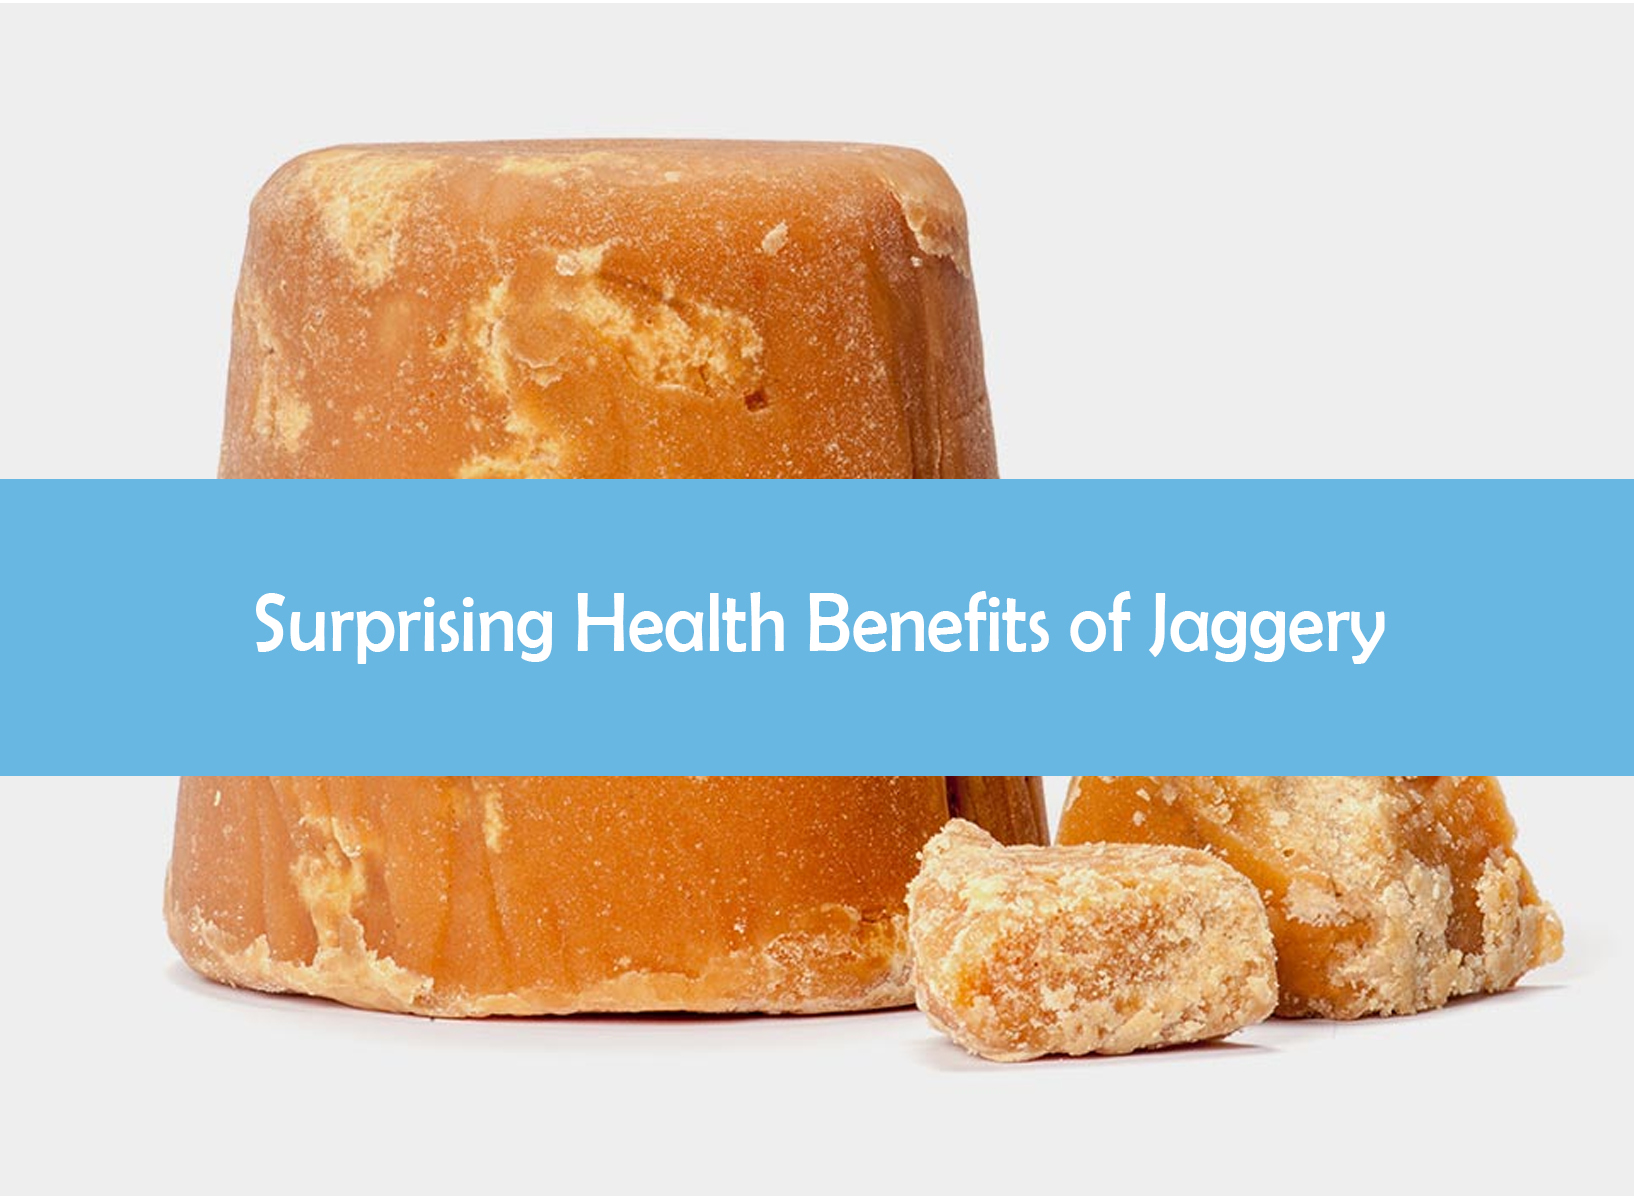 Jaggery health benefits